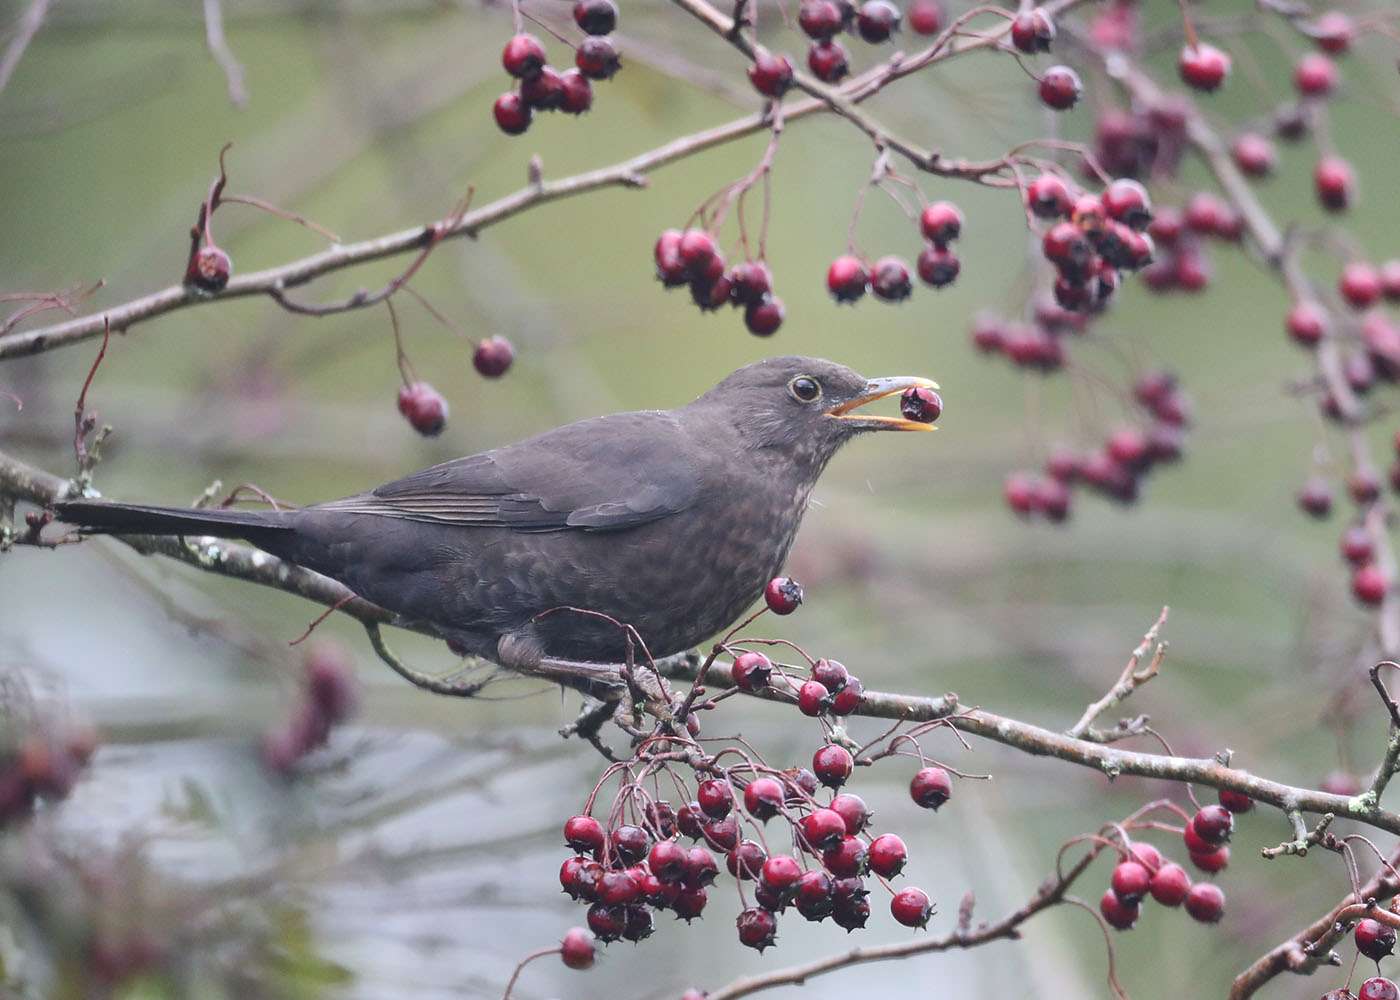 Blackbird by Steve Hopper at South Brent